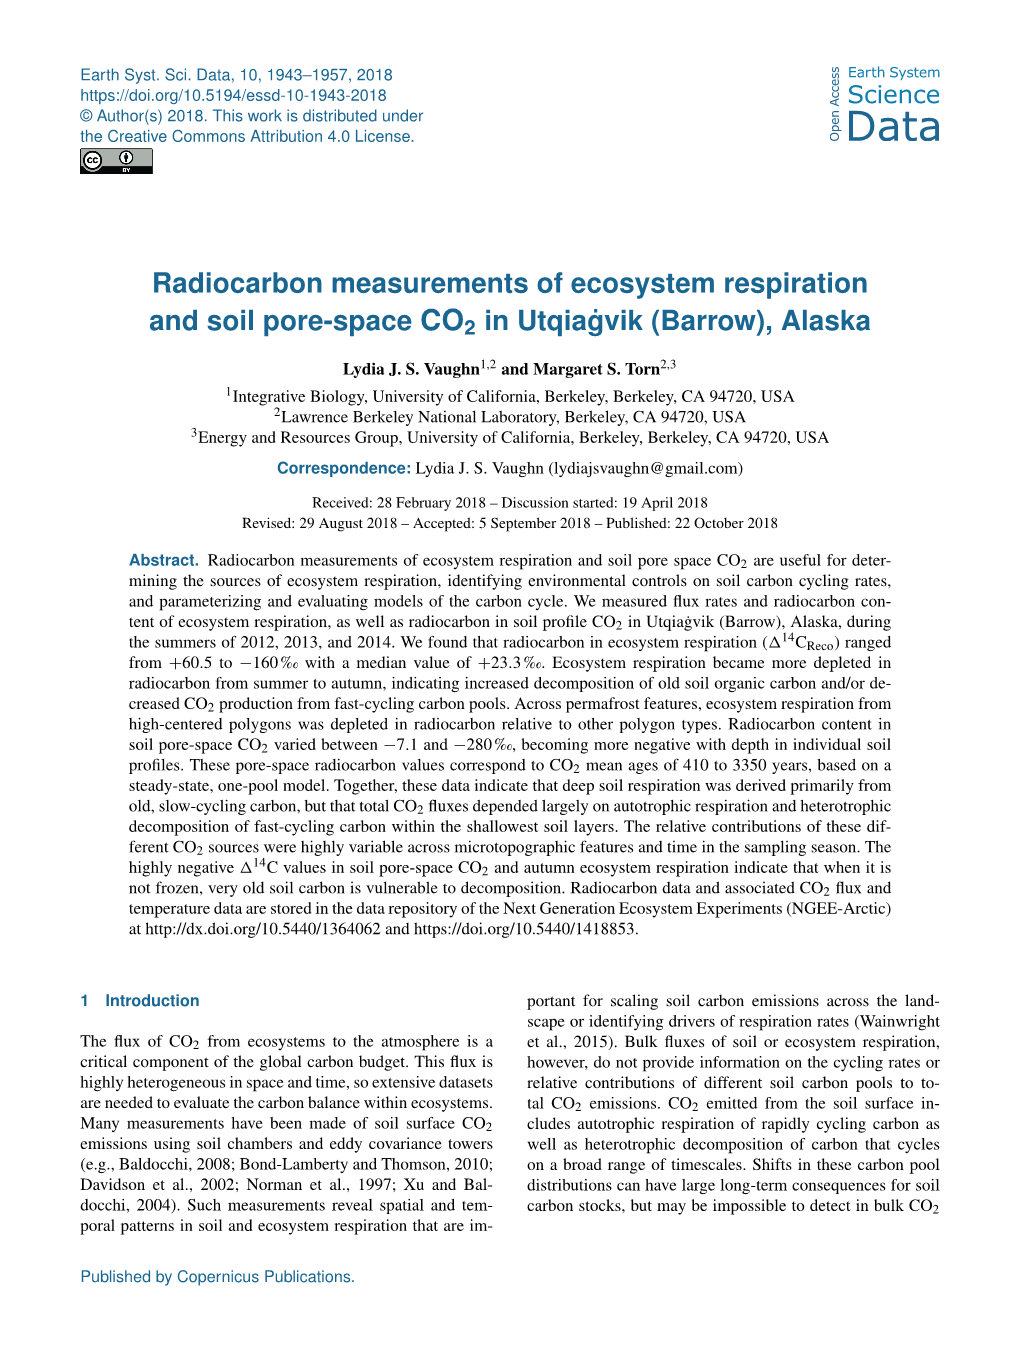 Radiocarbon Measurements of Ecosystem Respiration and Soil Pore-Space CO2 in Utqiagvik˙ (Barrow), Alaska